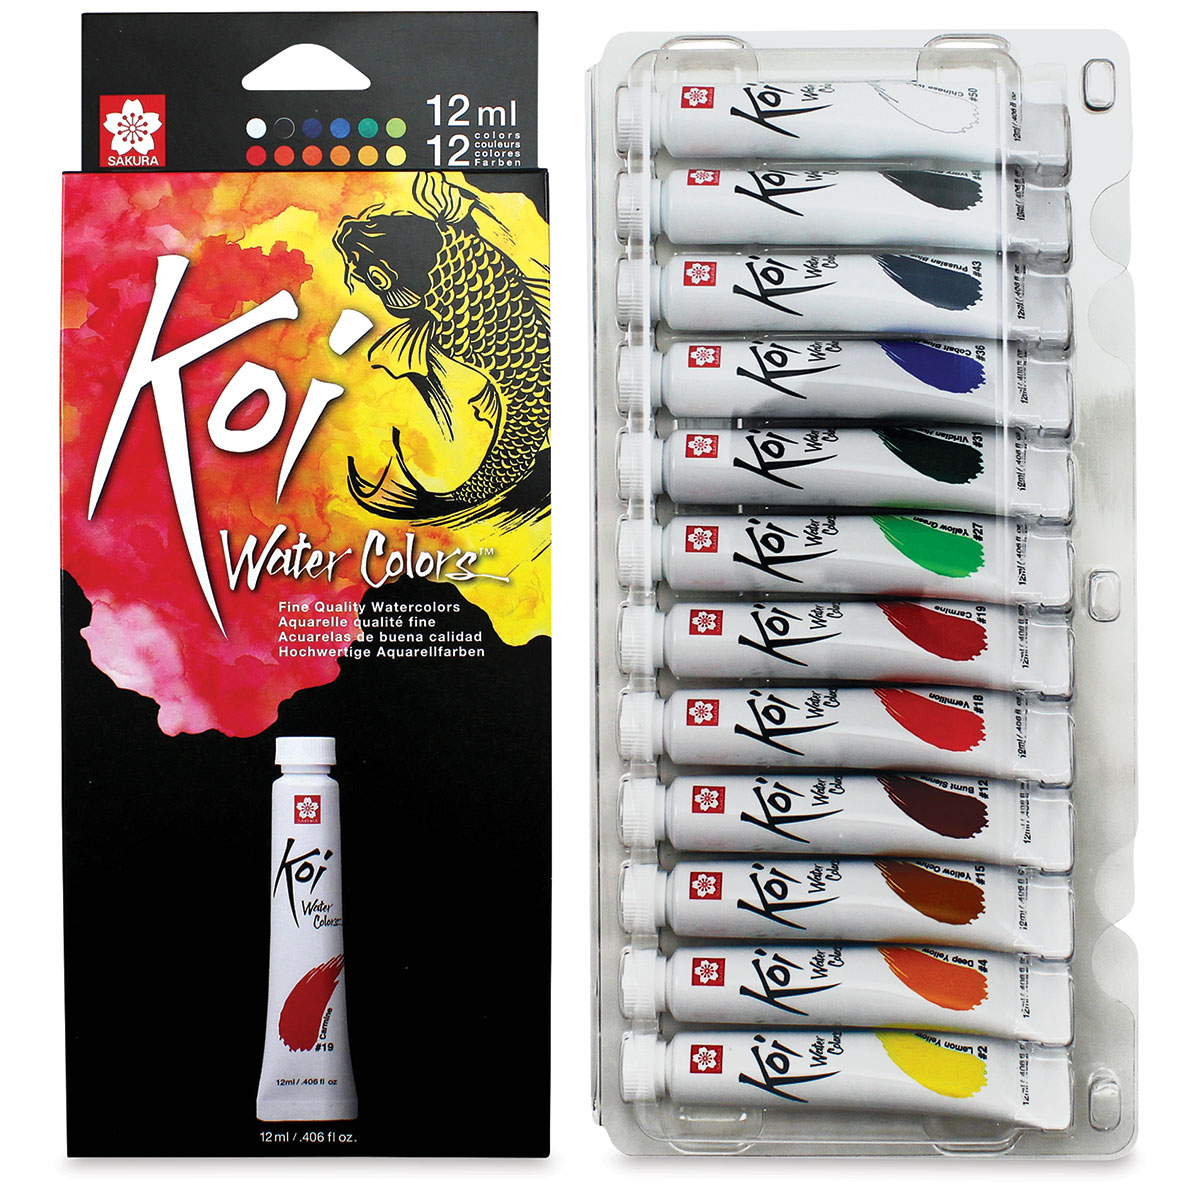 Koi Watercolor Paint Tubes 5ml set of 24 by Sakura - 084511373754